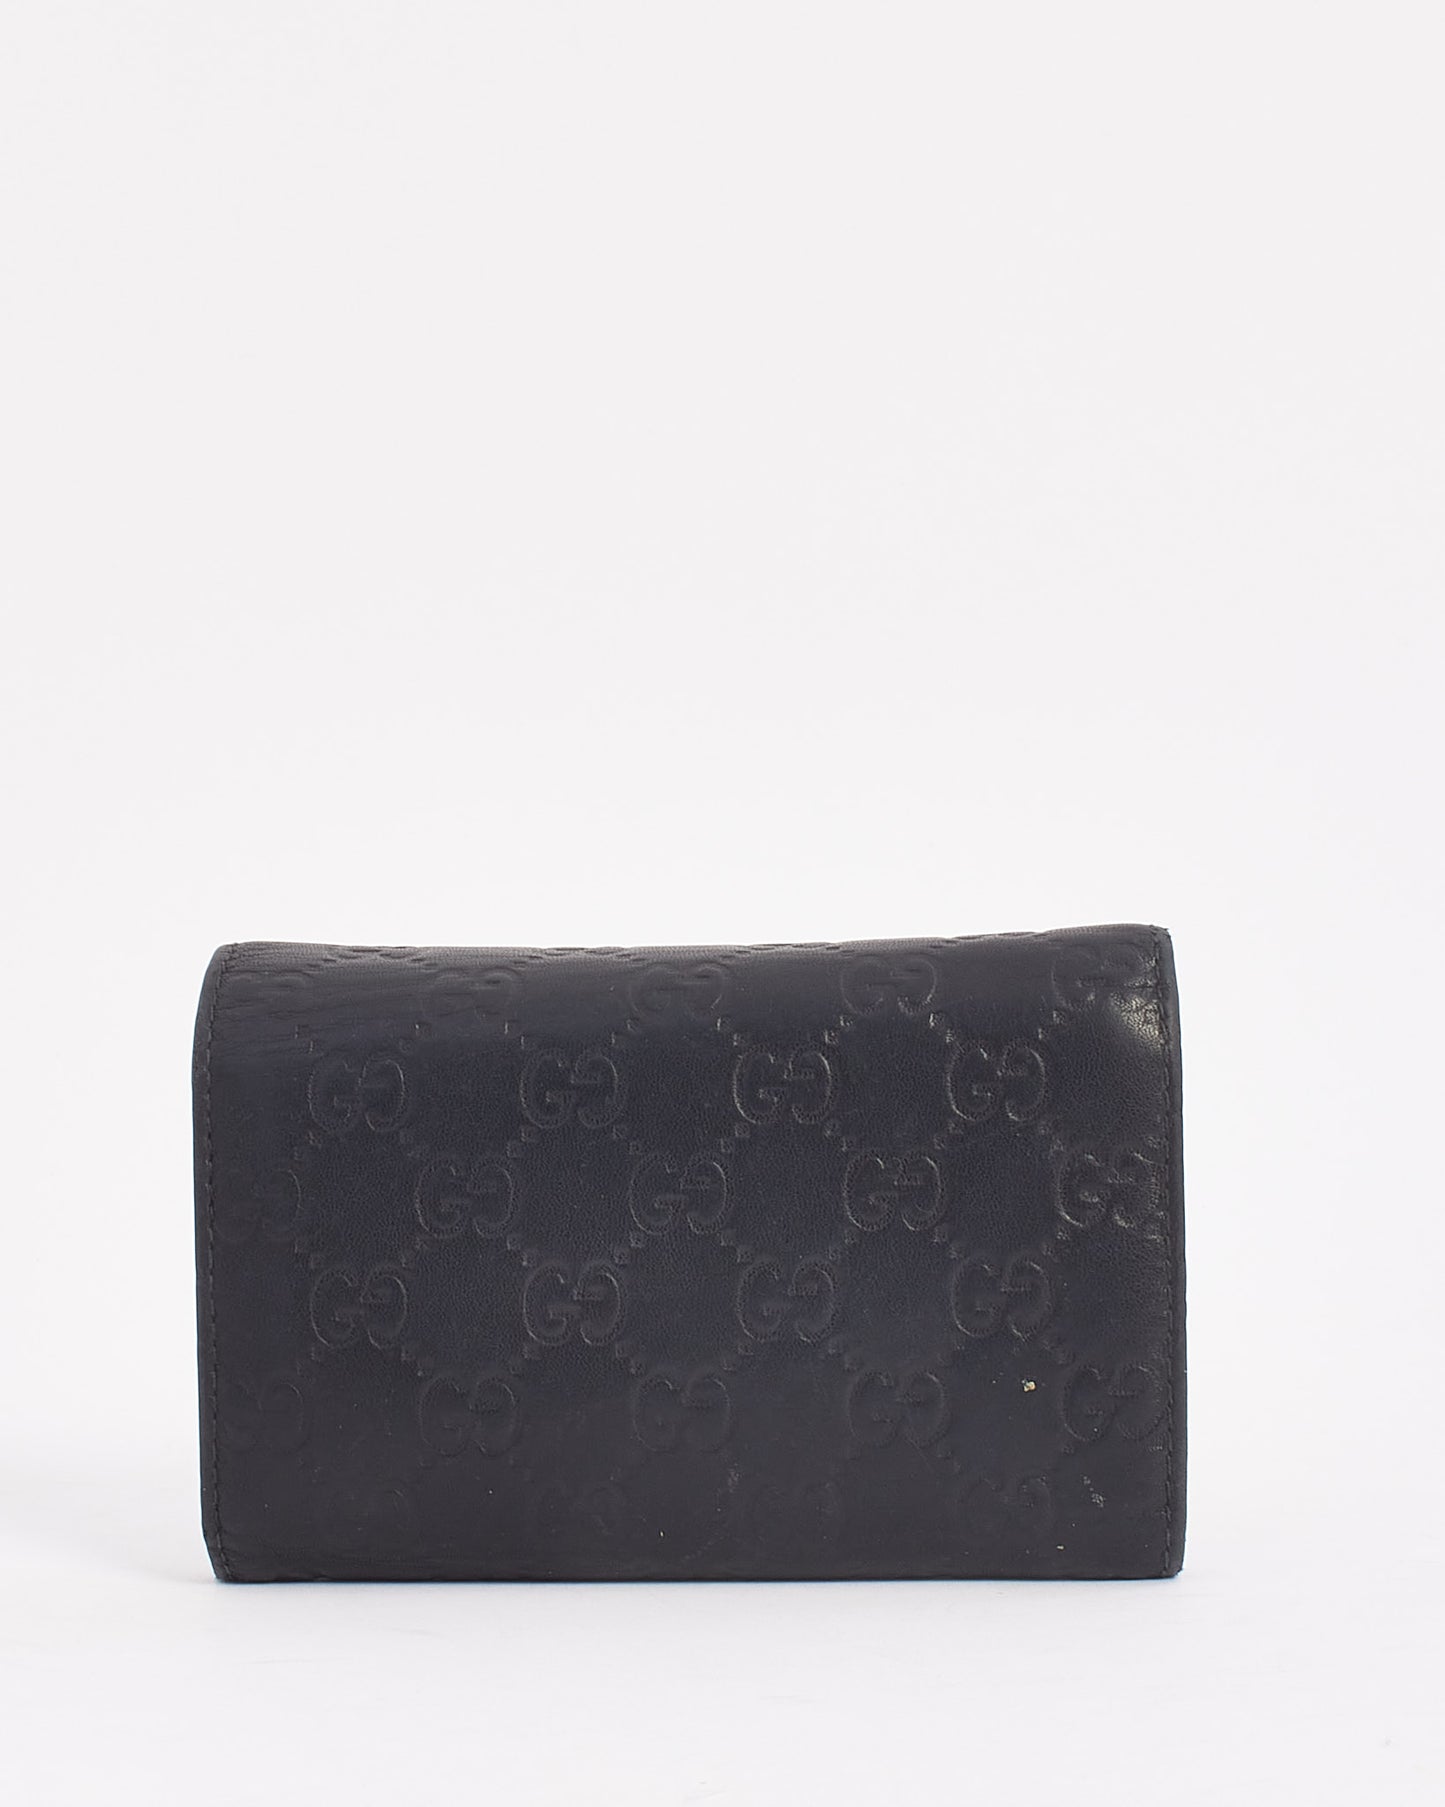 Gucci Black Leather Guccissima Continental Wallet